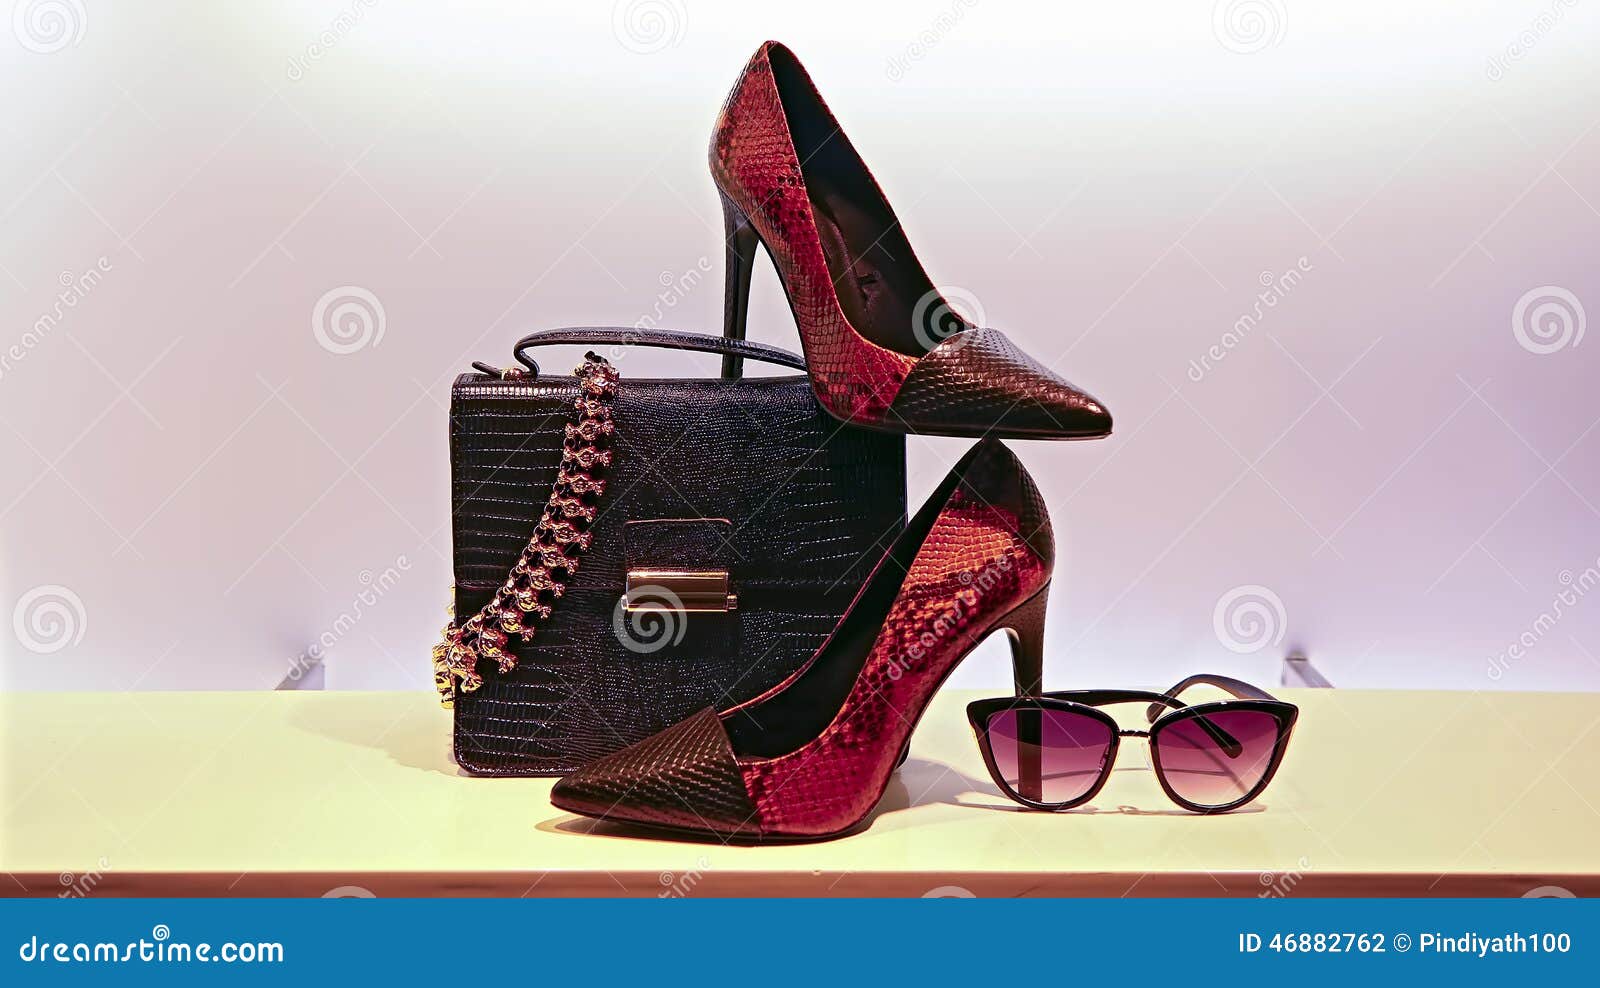 ladies shoes, handbag, sunglass and jewelry